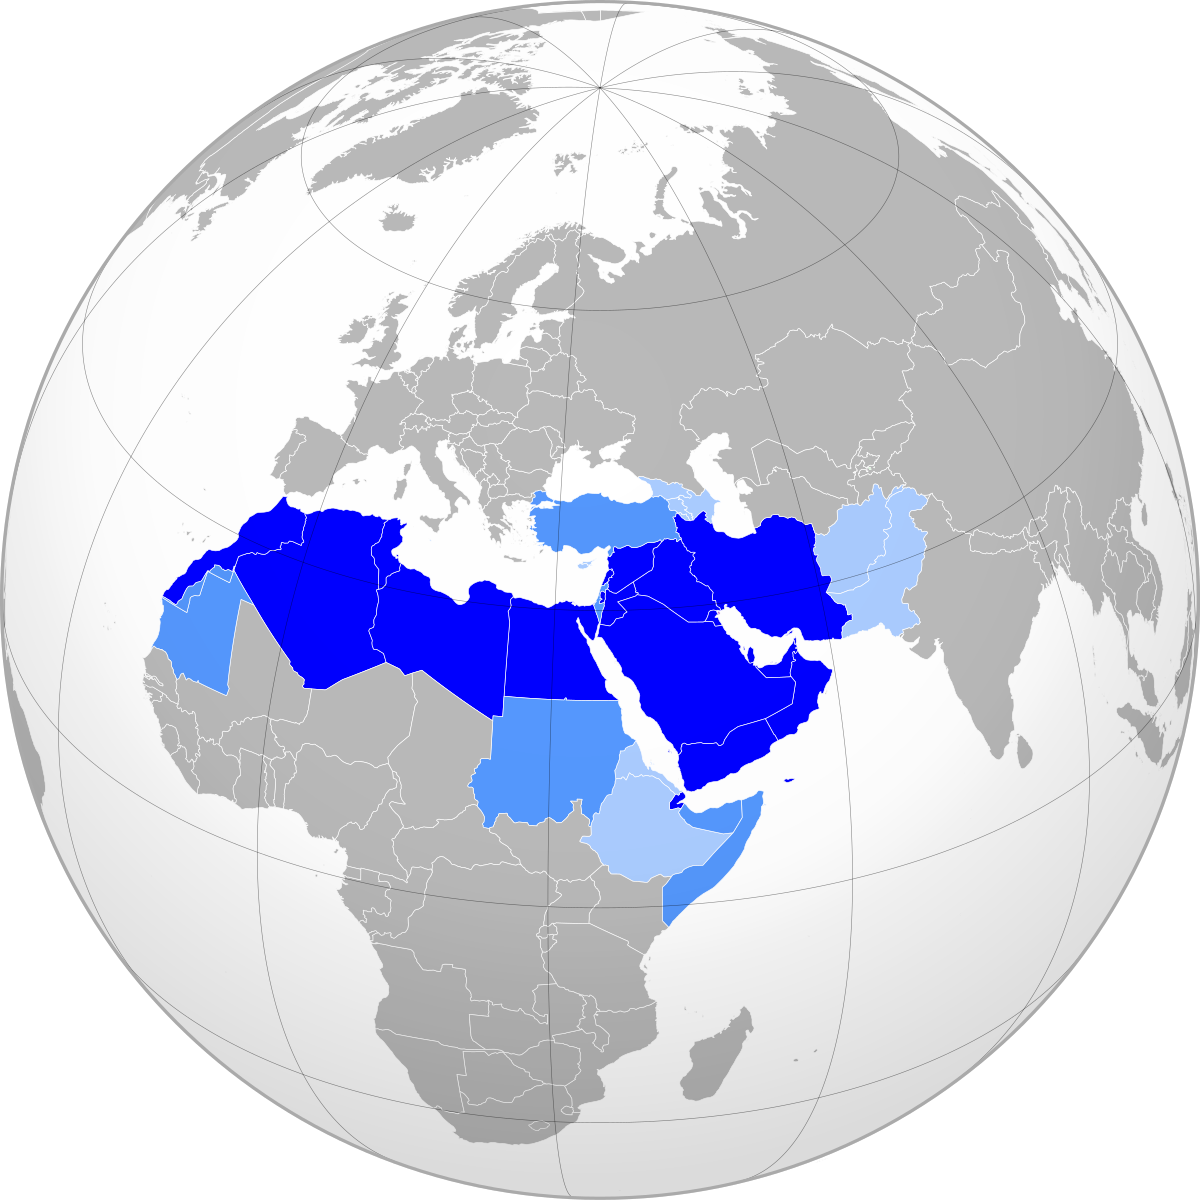 Оон регион. Mena регион. Африка и Ближний Восток. Ближний Восток и Северная Африка. Ближний средний Восток и Северная Африка.